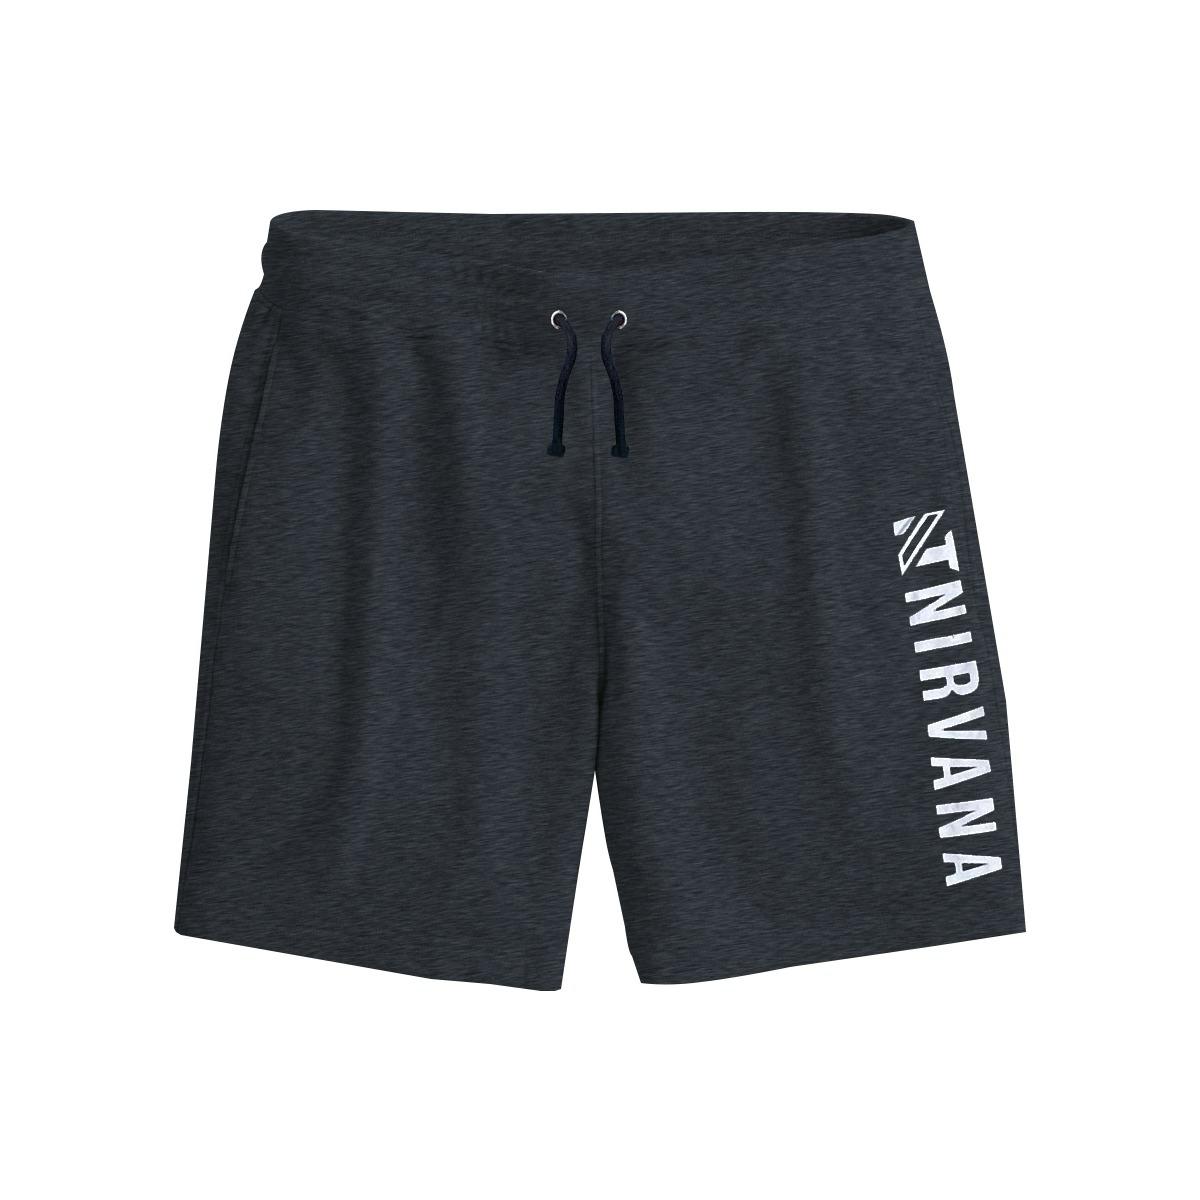 NT Printed Two Quarter Summer Shorts - Charcoal Gray